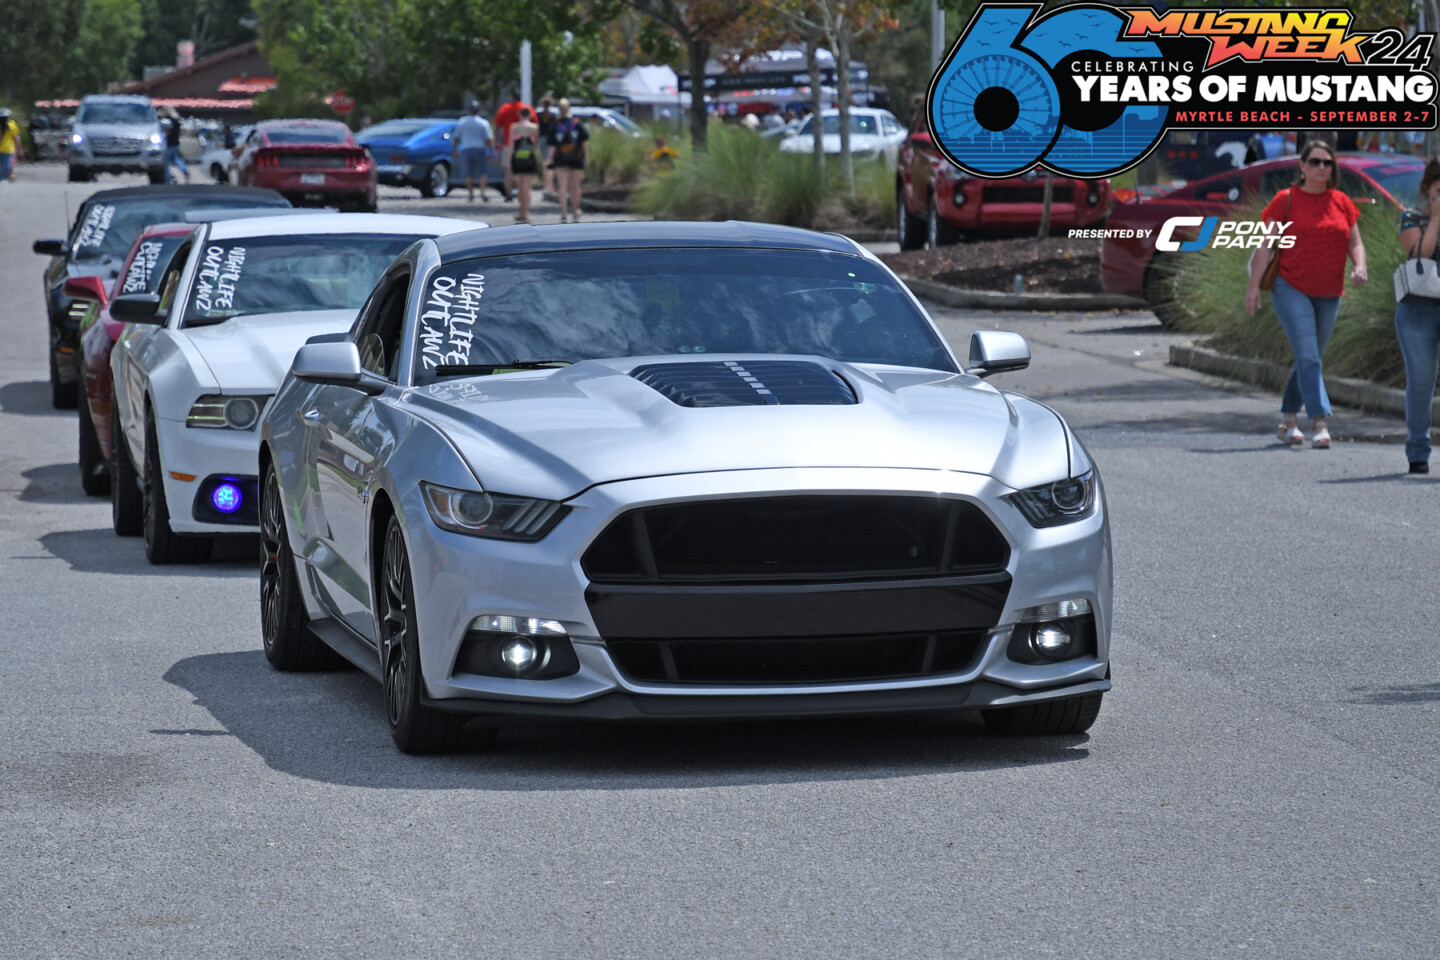 Mustang Week 60th anniversary